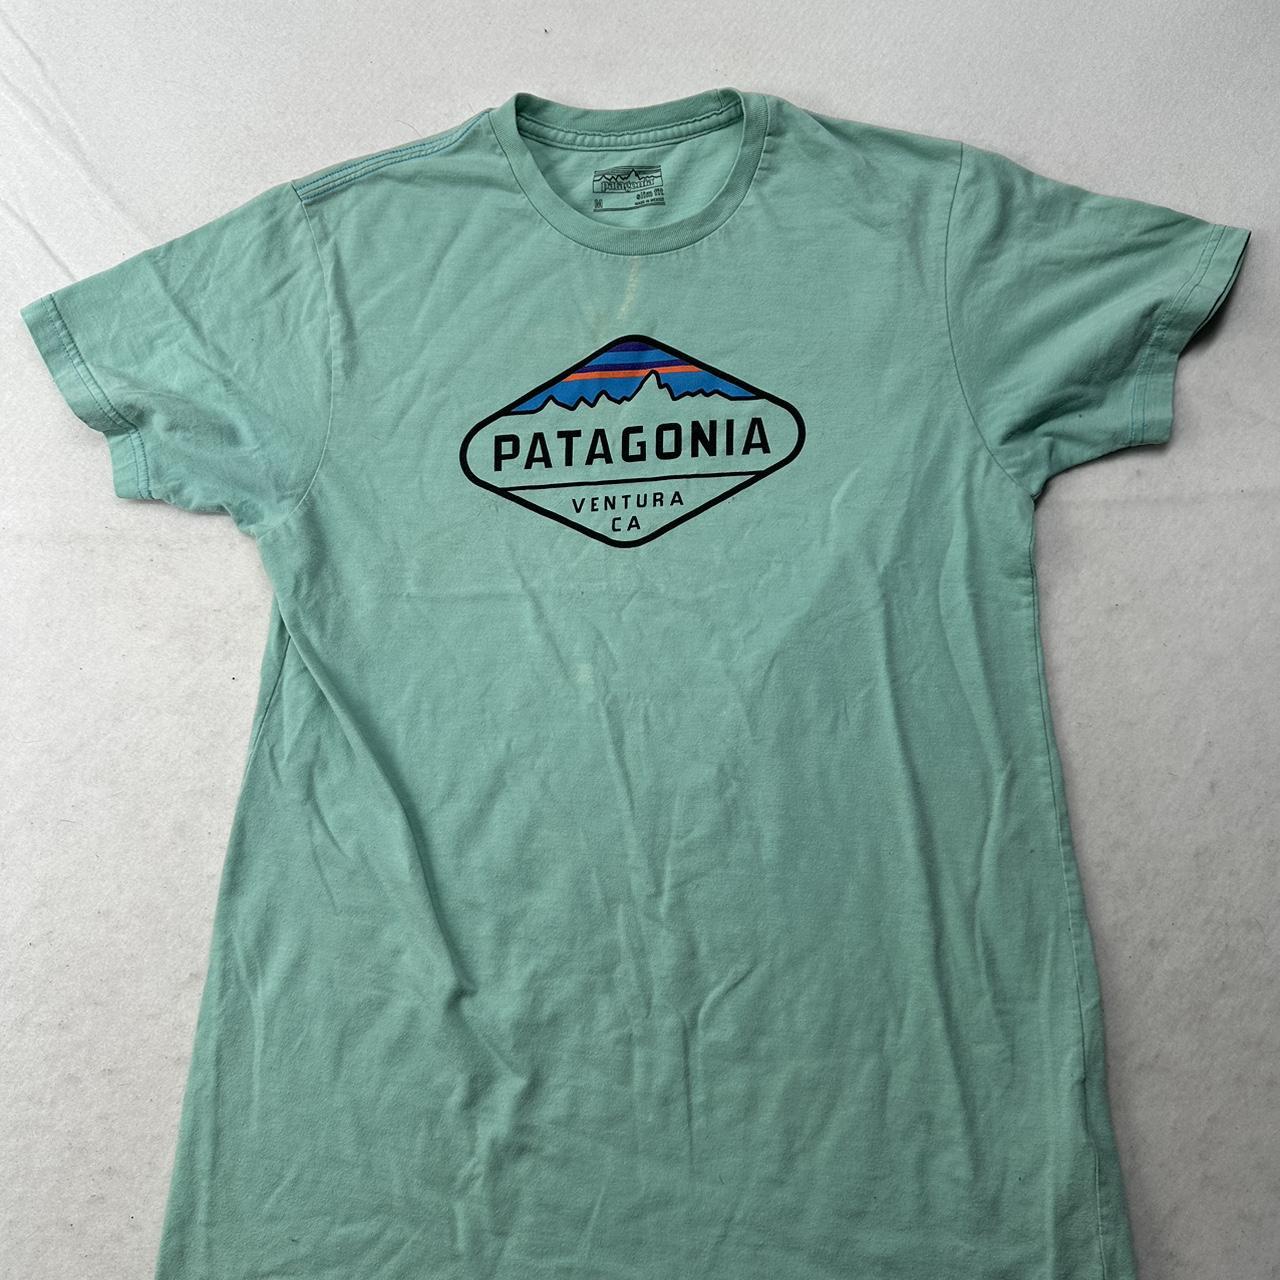 Patagonia Ventura California tshirt size medium slim... - Depop